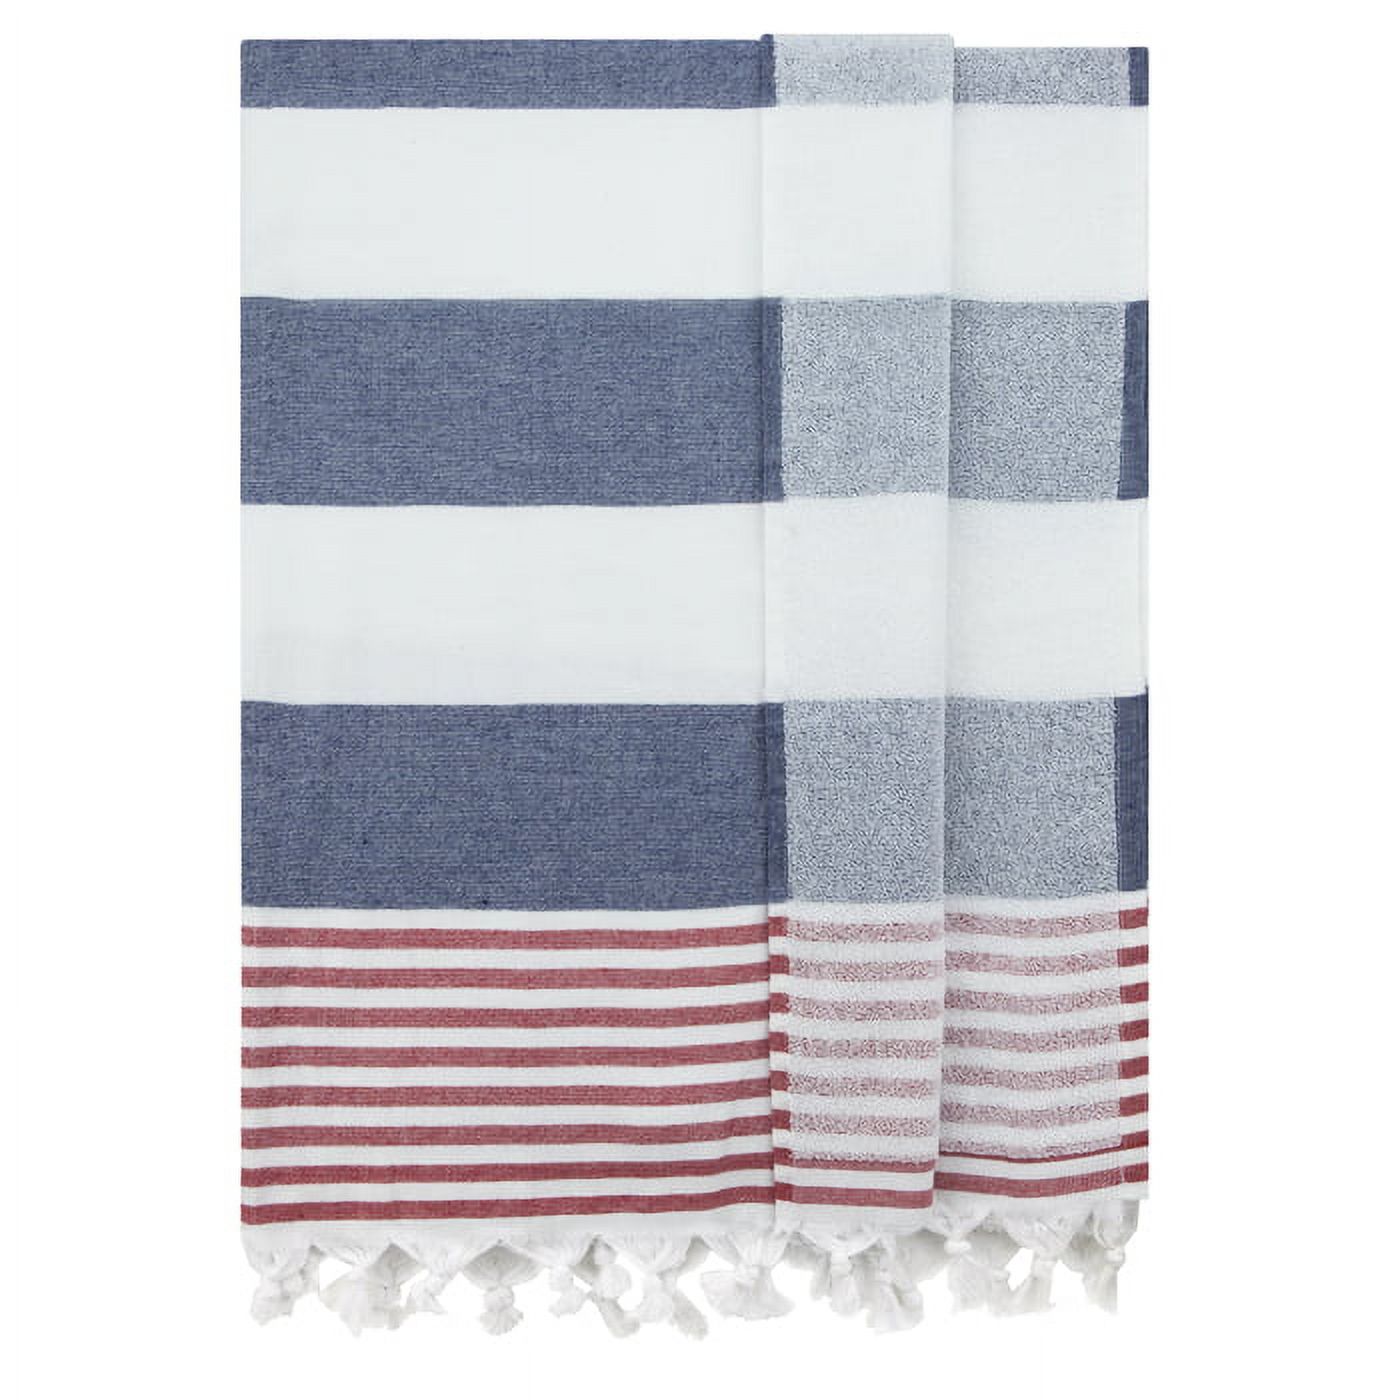 Swan Comfort Bath & Resort Beach Towel, %100 Cotton Peshtemal, Pool, Spa, Sauna, Hot Yoga Towel (Double Sided) Various Colors - ( Navy - Red ) - image 1 of 3